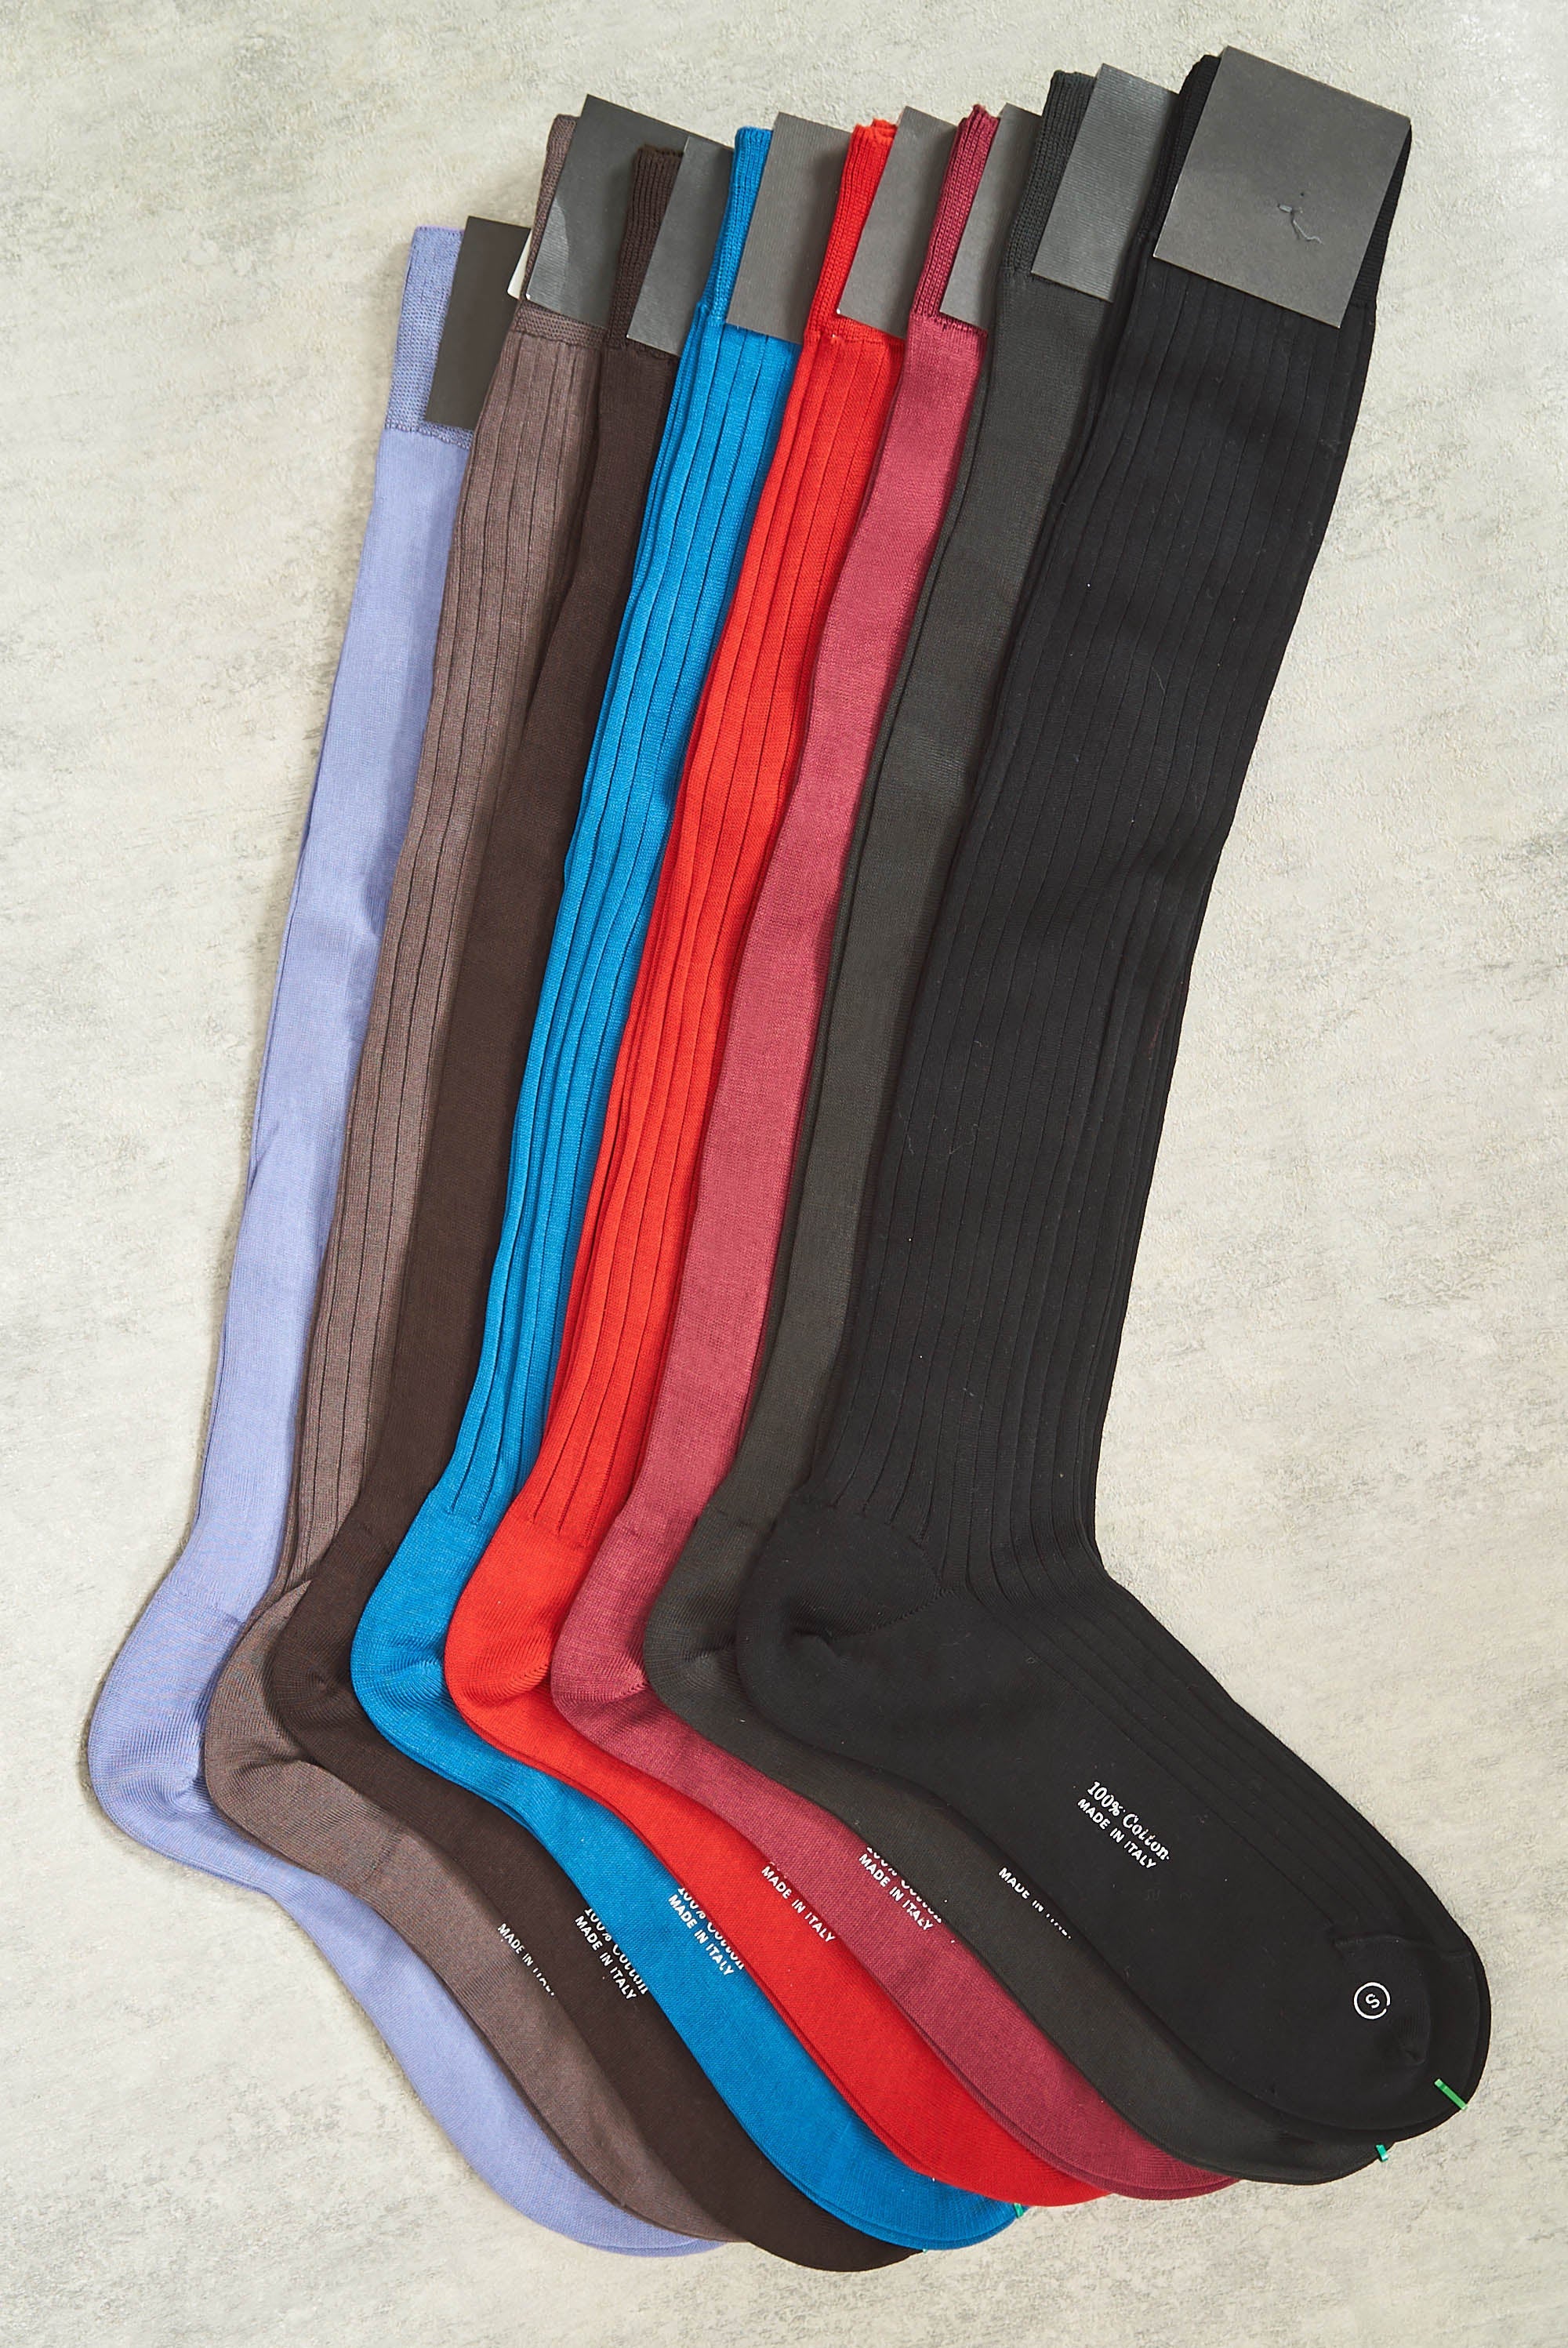 Sorley Long Socks 6 Pack Bundle - Vibrant